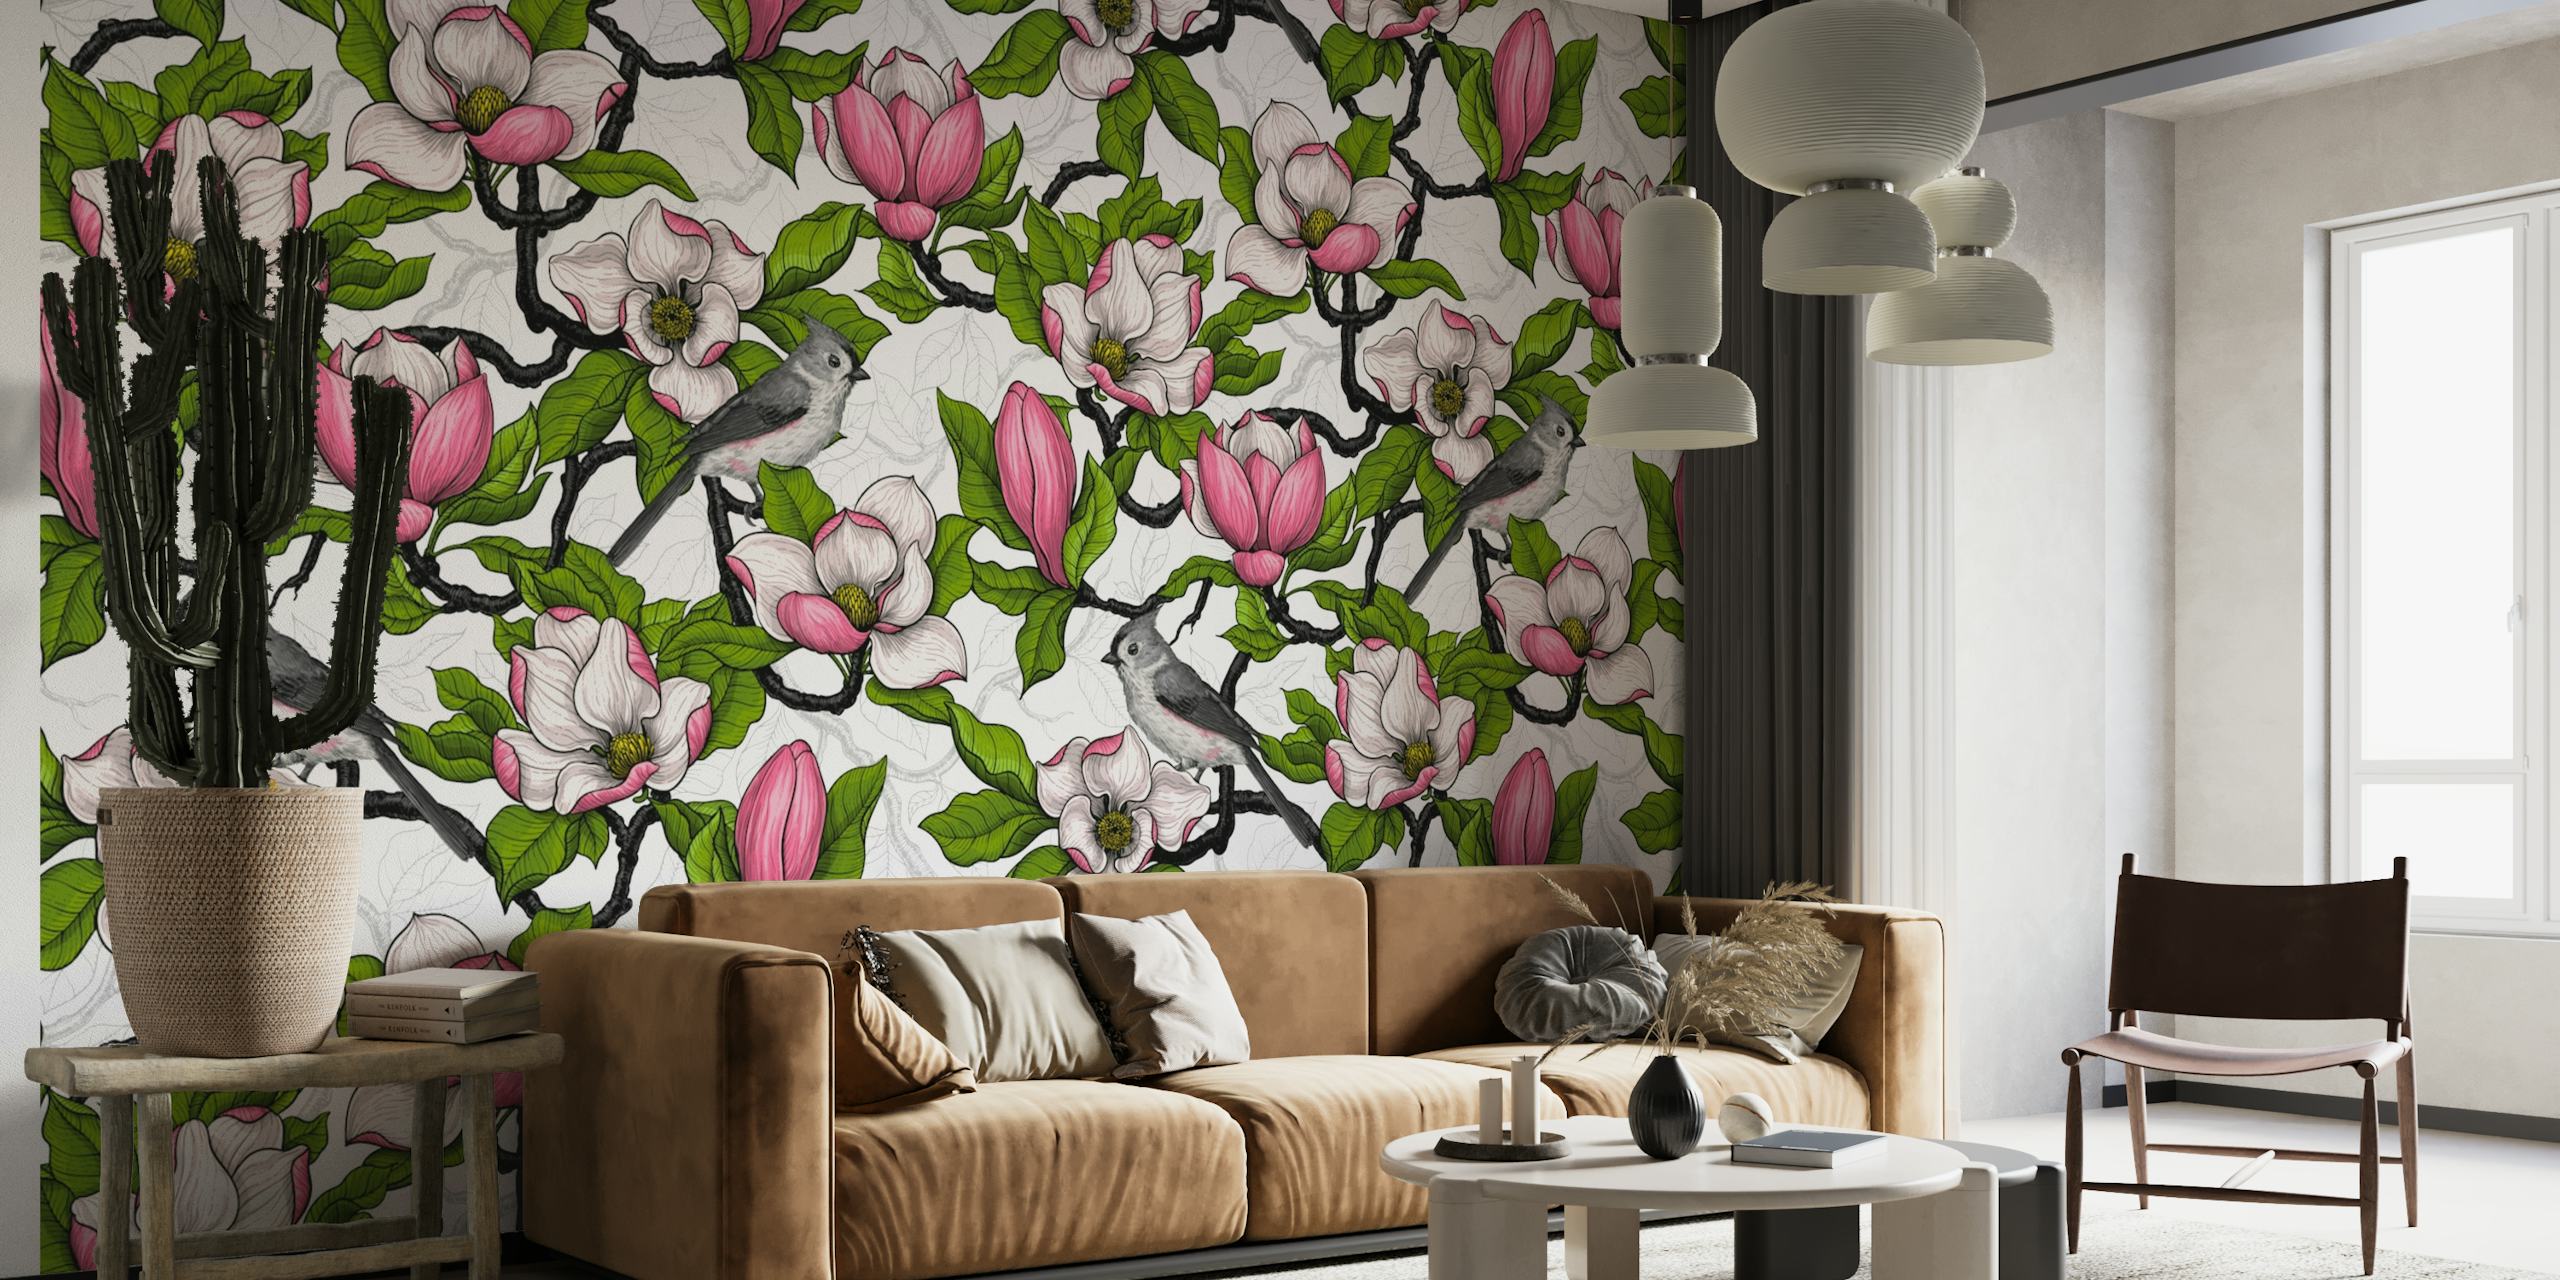 Blooming magnolia and bird papel pintado